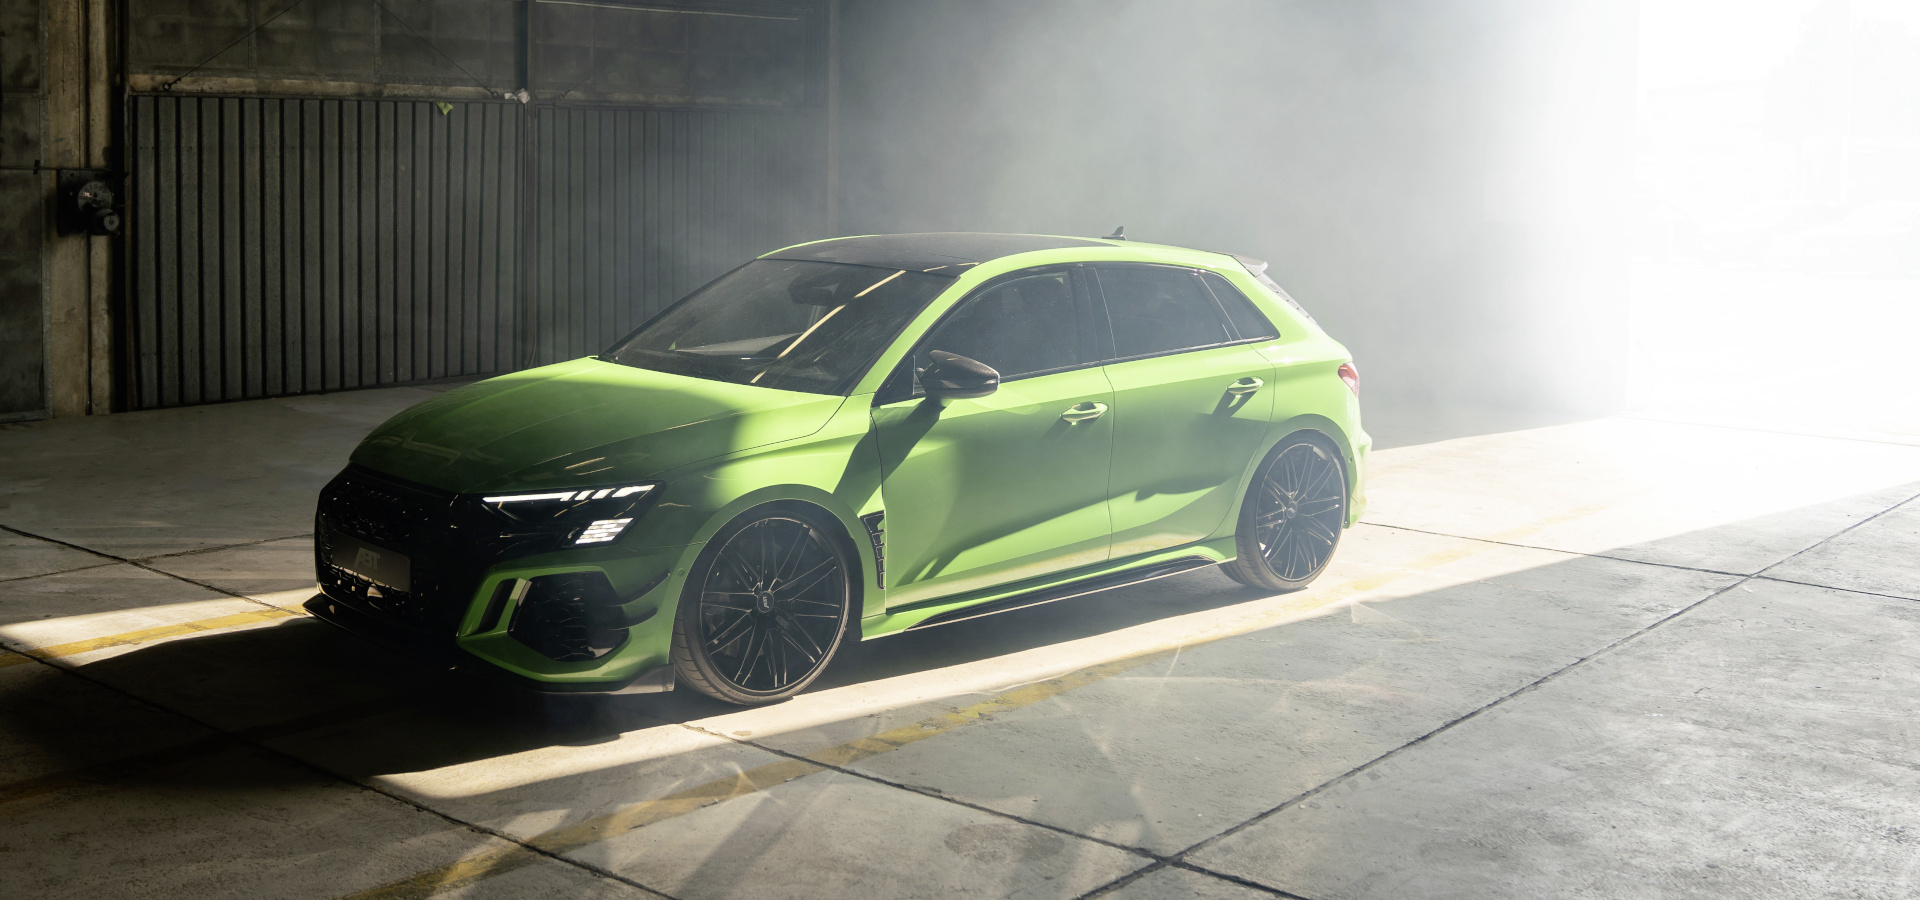 Audi Q2 - Audi Tuning, VW Tuning, Chiptuning von ABT Sportsline.